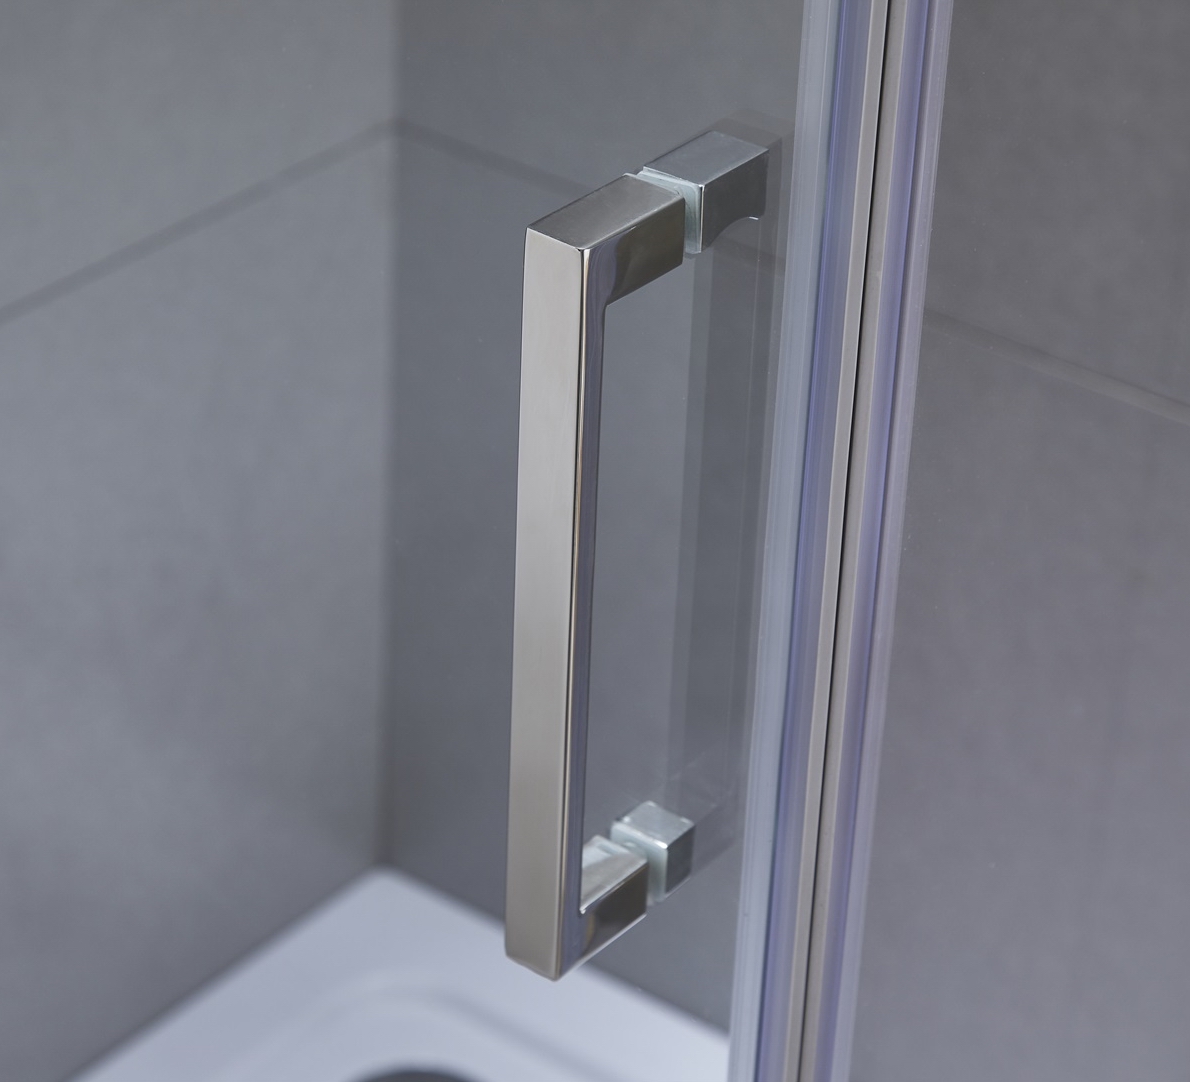 Bathroom Pivot Folding Glass Door Aluminum Shower Door Enclosure And Base Shower Tray